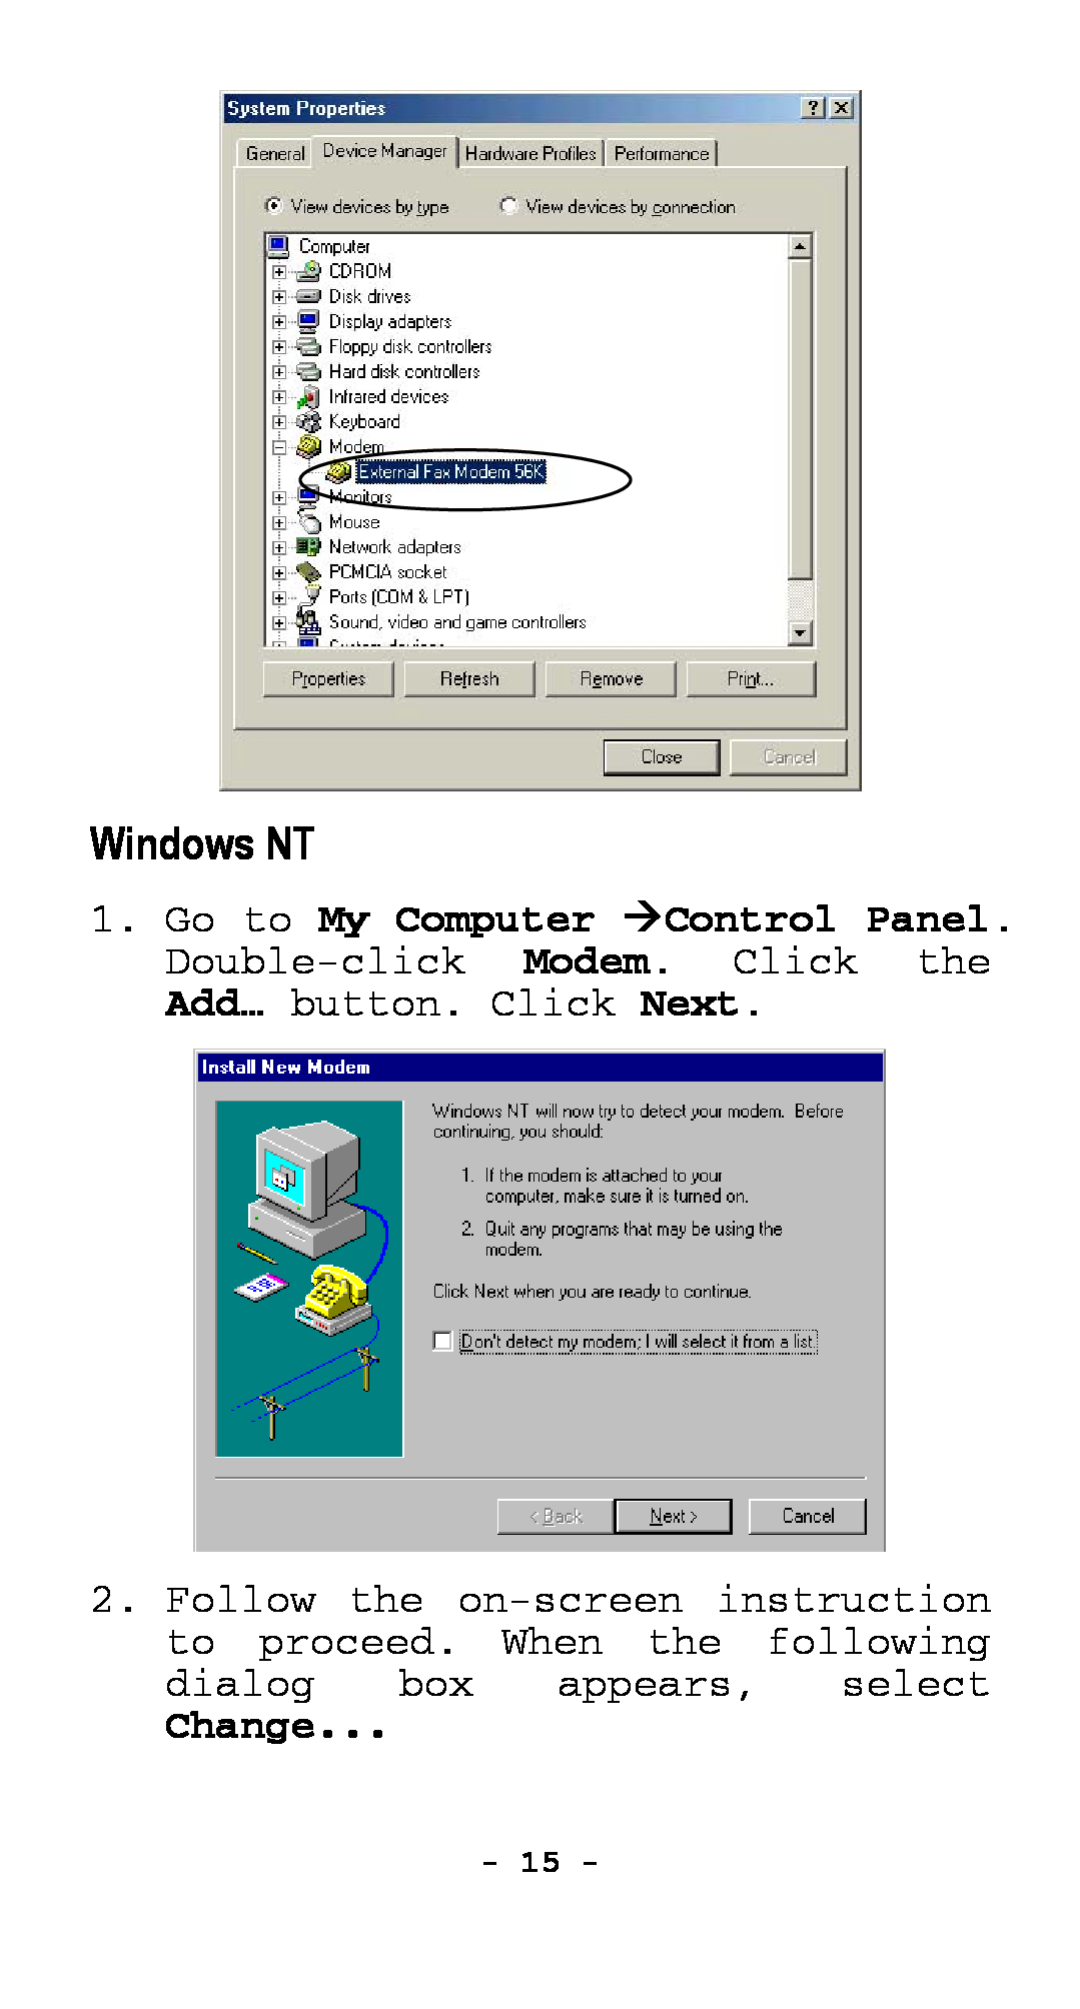 Abocom EFM560 manual Windows NT, Change 